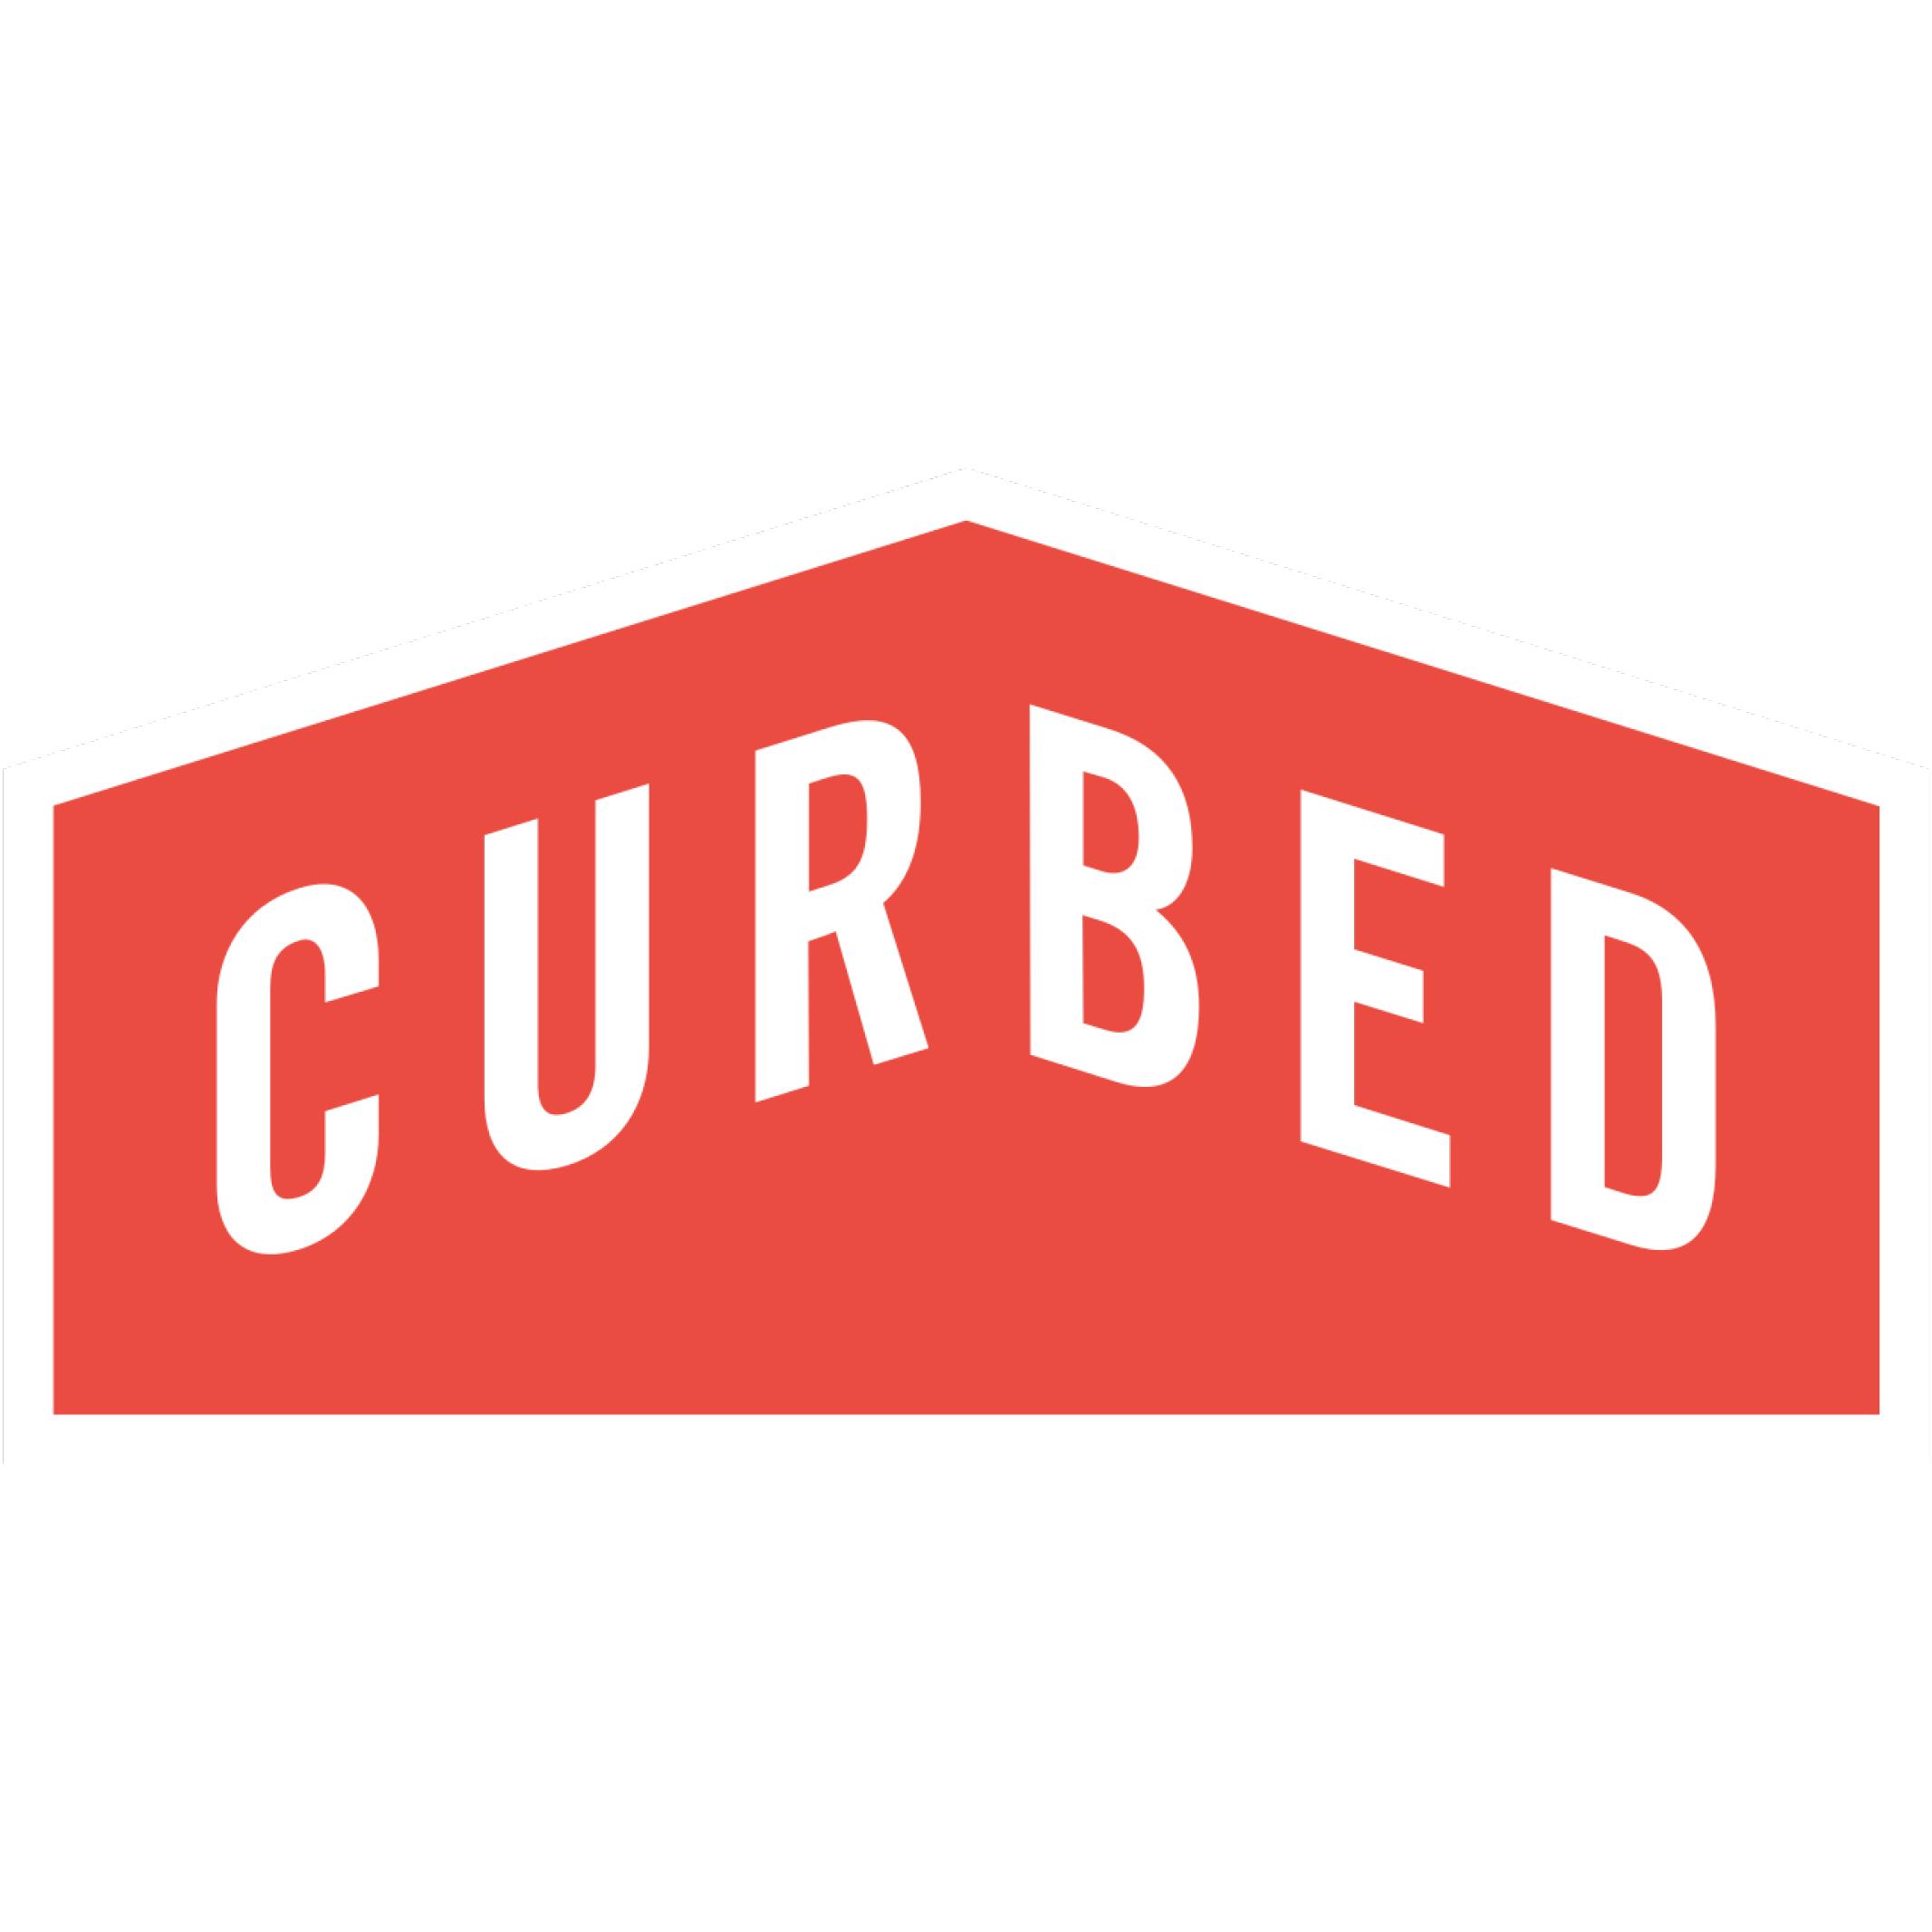 curbed logo